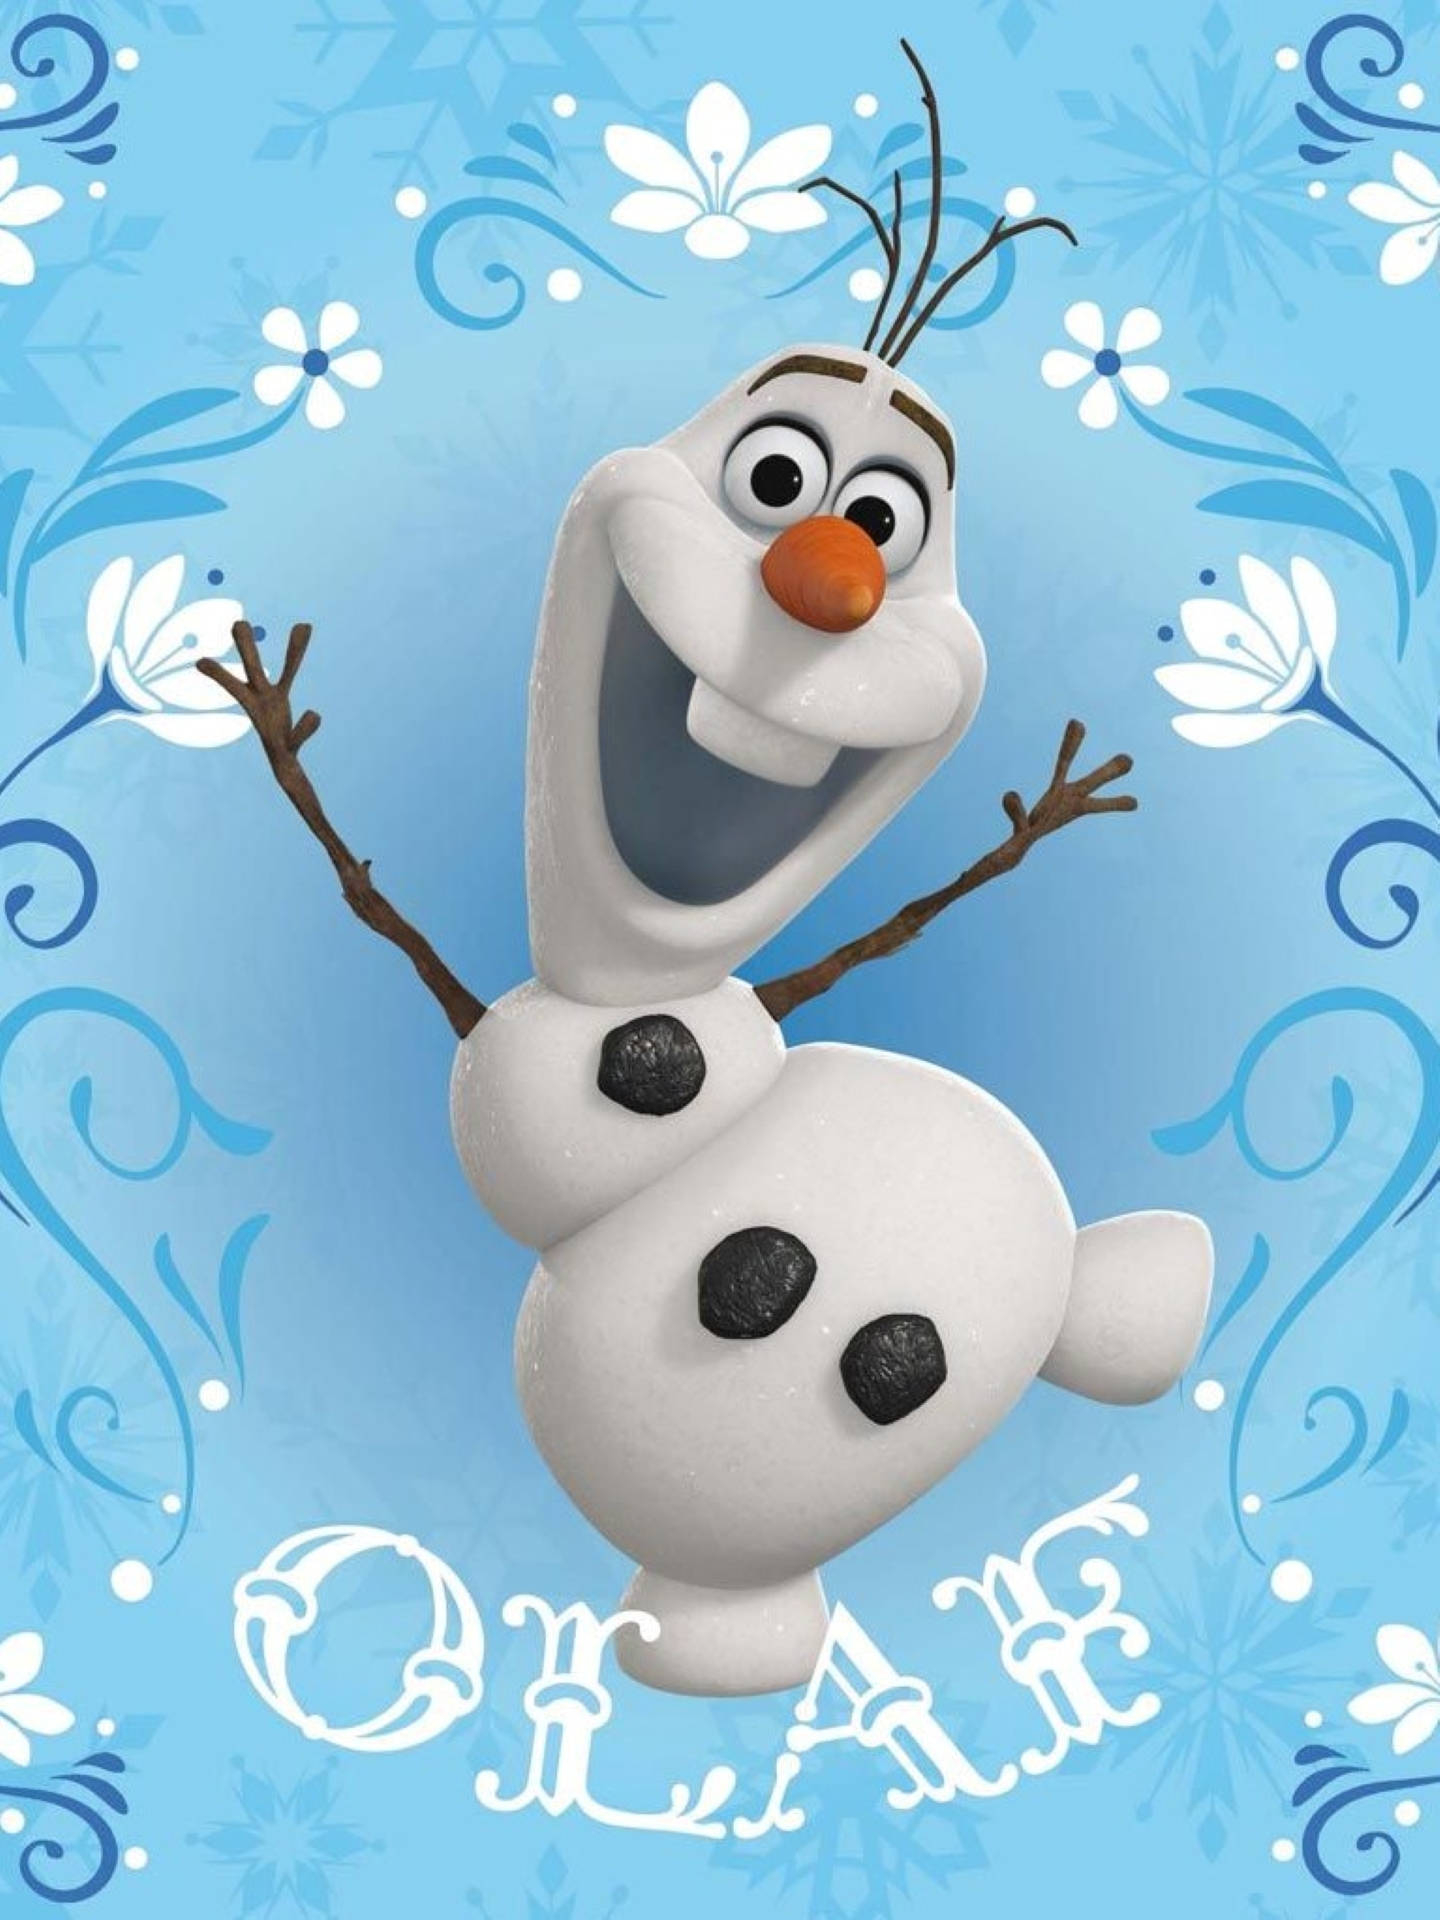 1440x1920 Download Olaf The Friendly Snowman Wallpaper